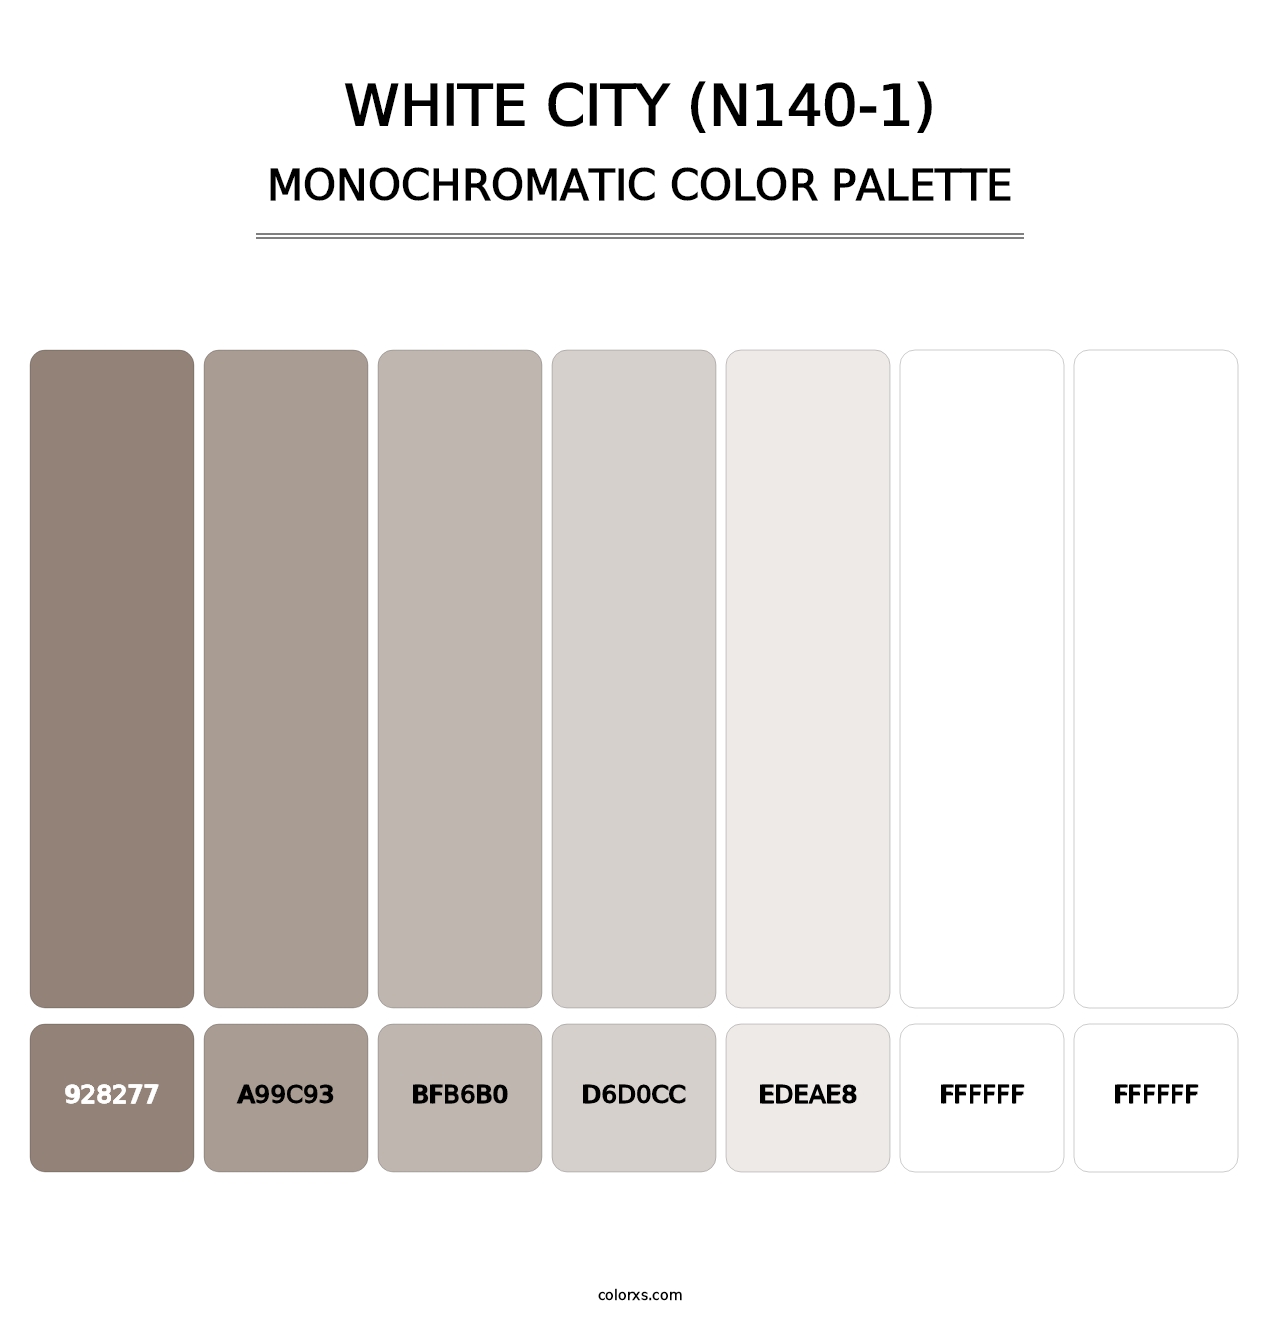 White City (N140-1) - Monochromatic Color Palette